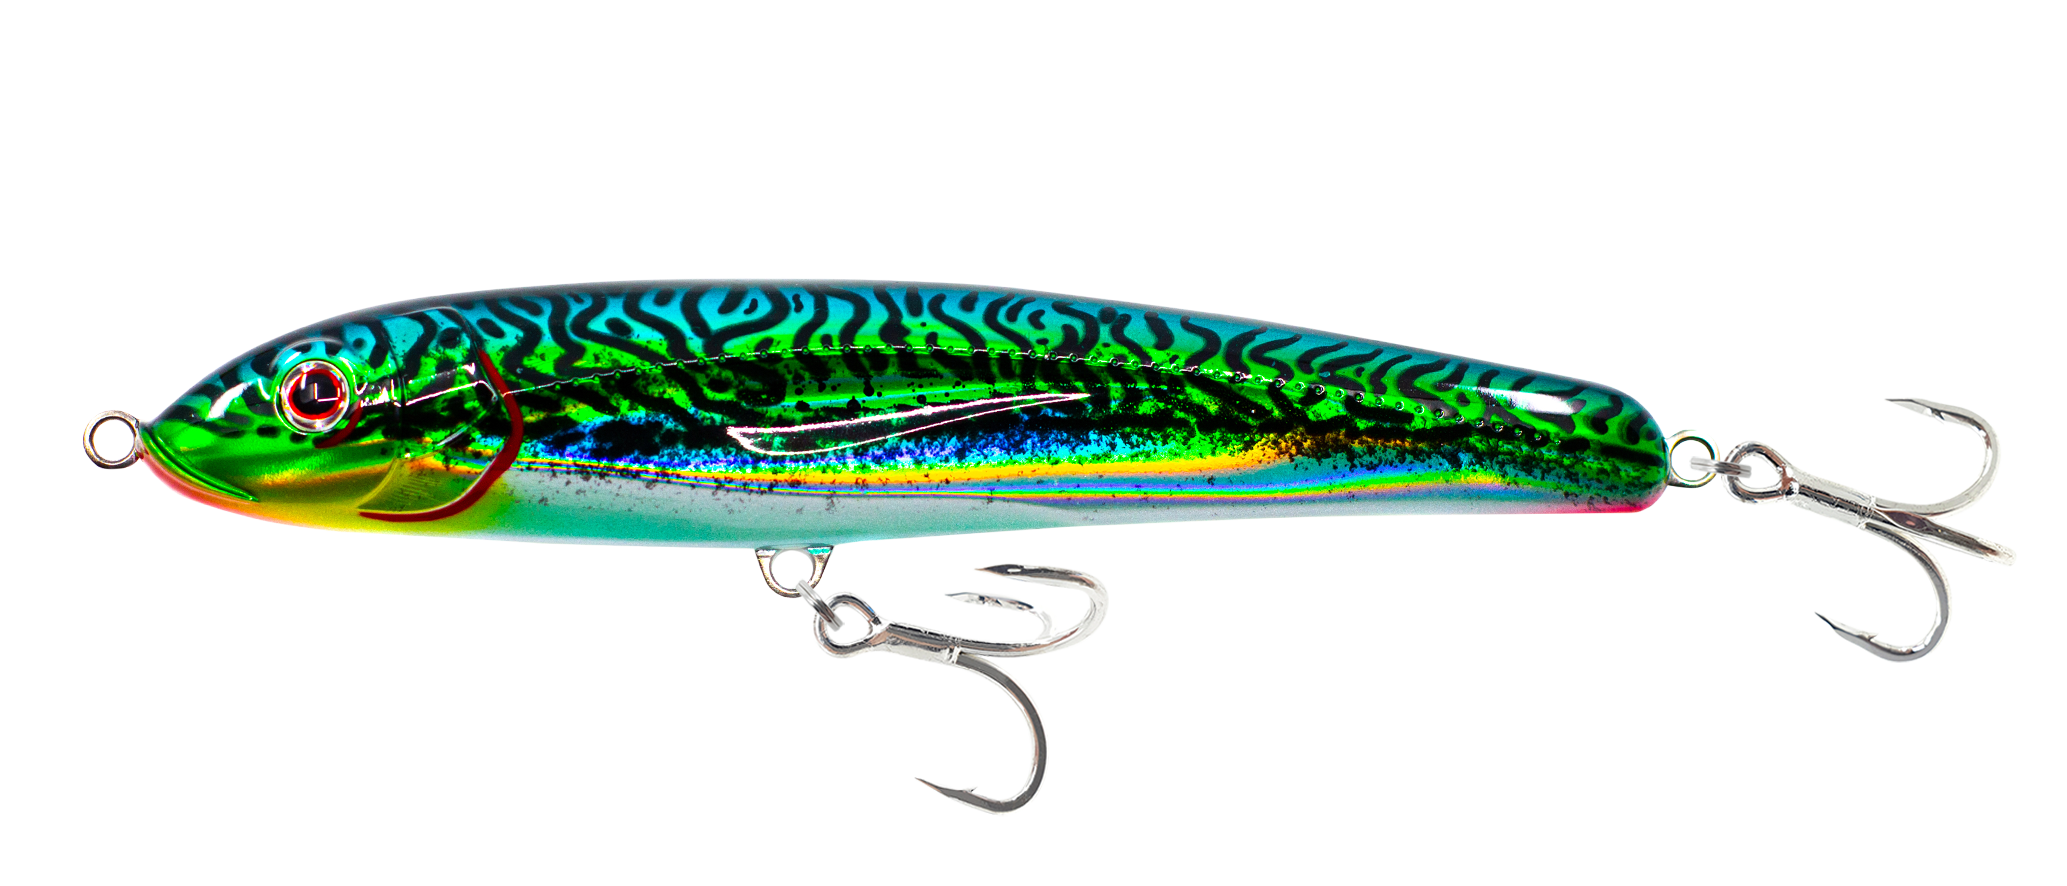 Nomad Design Riptide - 125mm Slow Sinking - Silver Green Mackerel